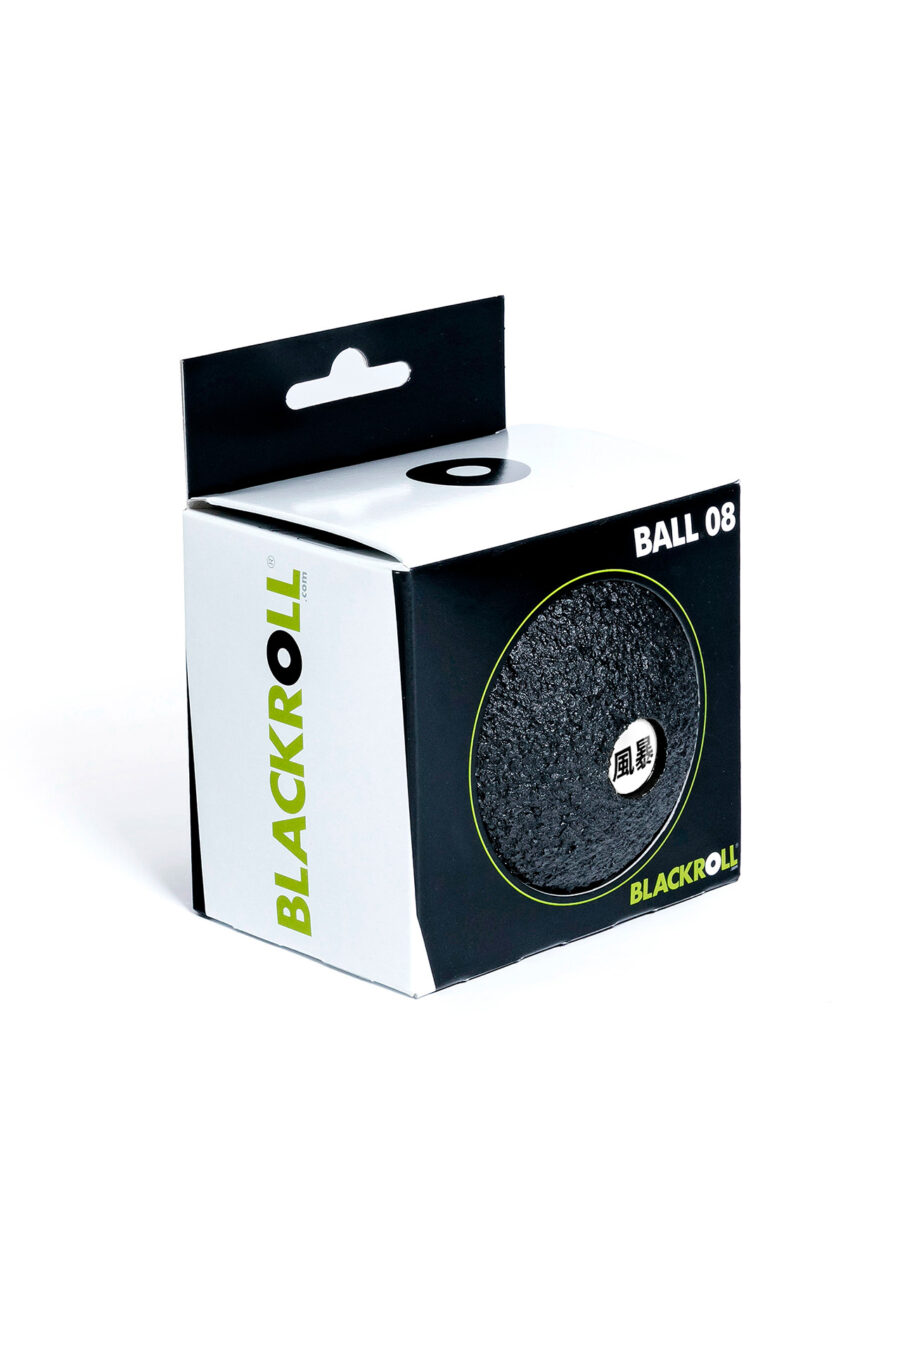 blackroll ball 8cm fengbao kung fu shop wien 1080 verpackung chinesisch schwarz